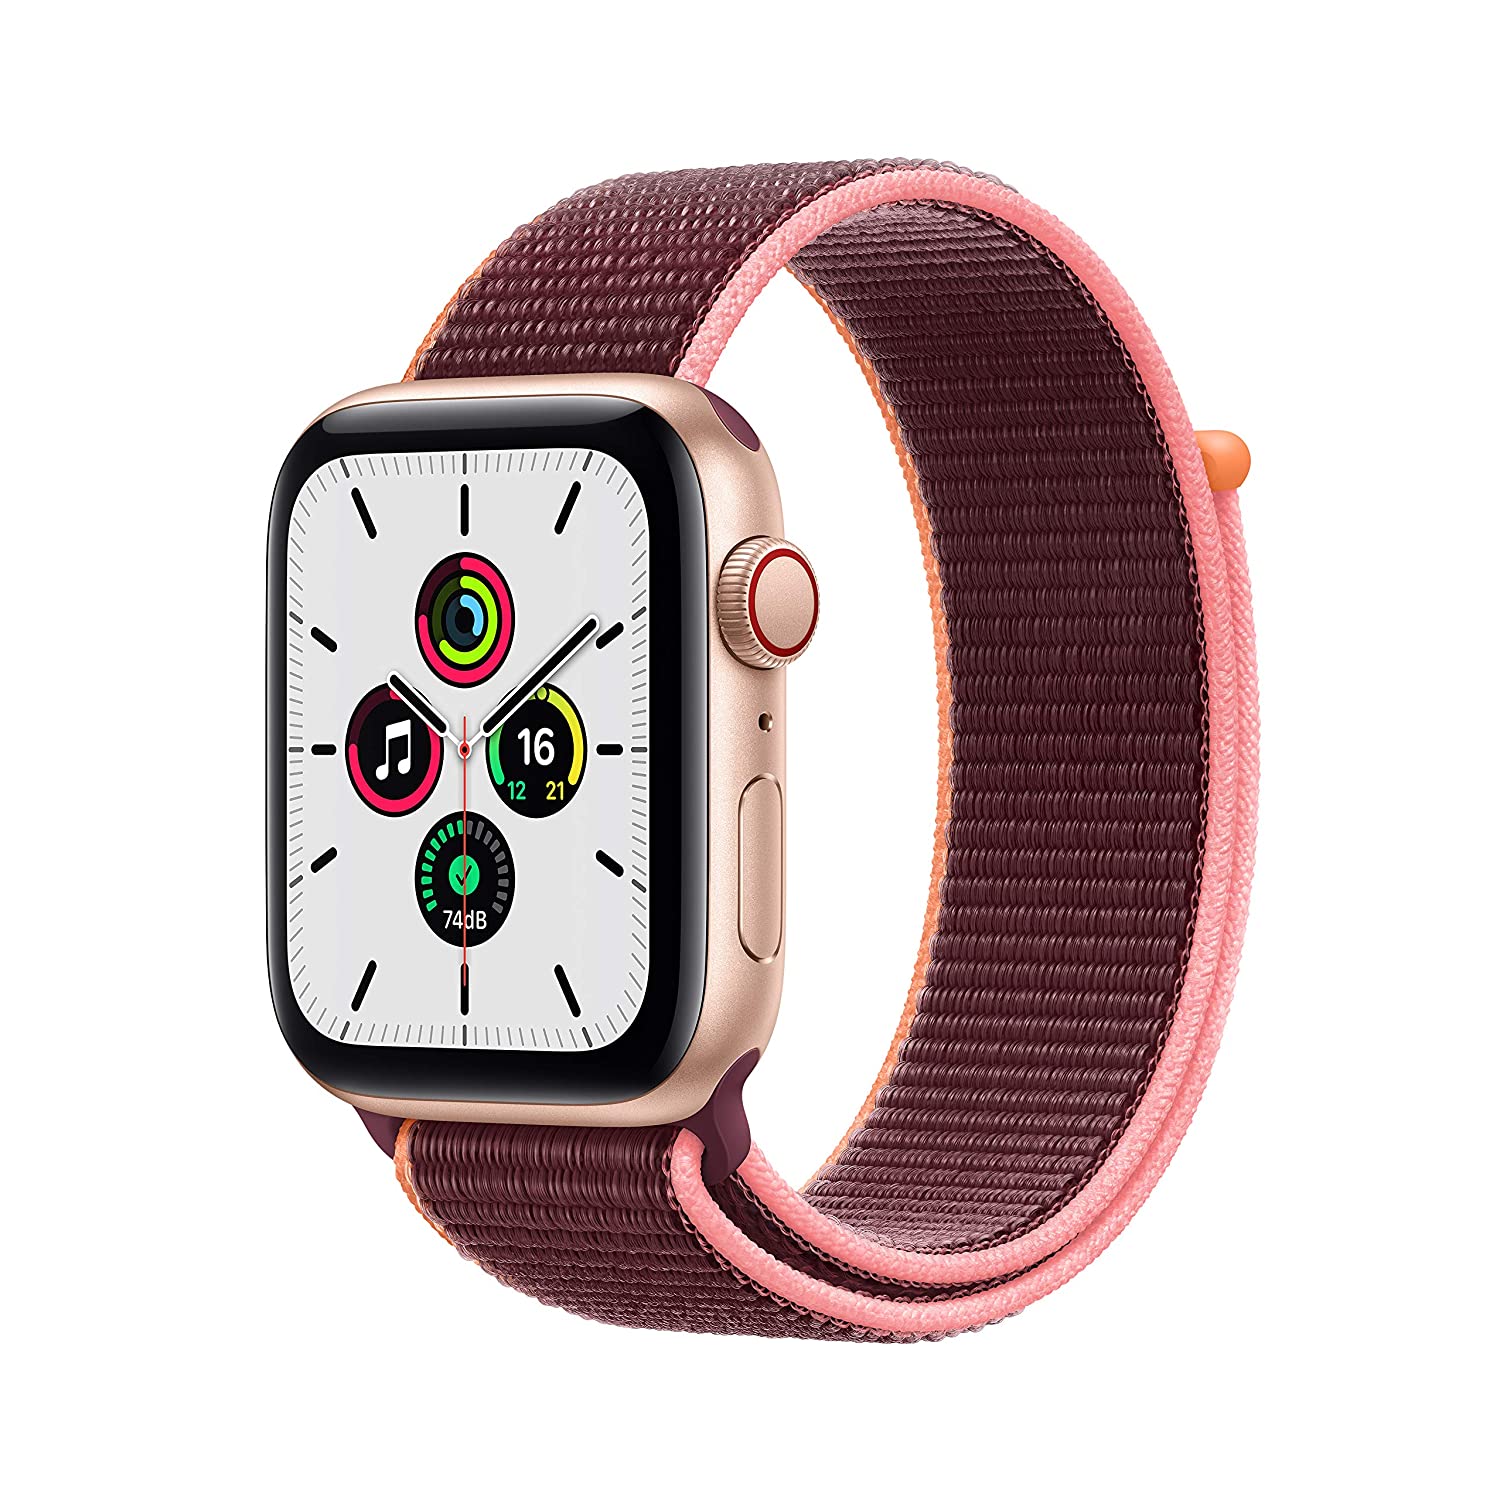 New Apple watch SE compare 